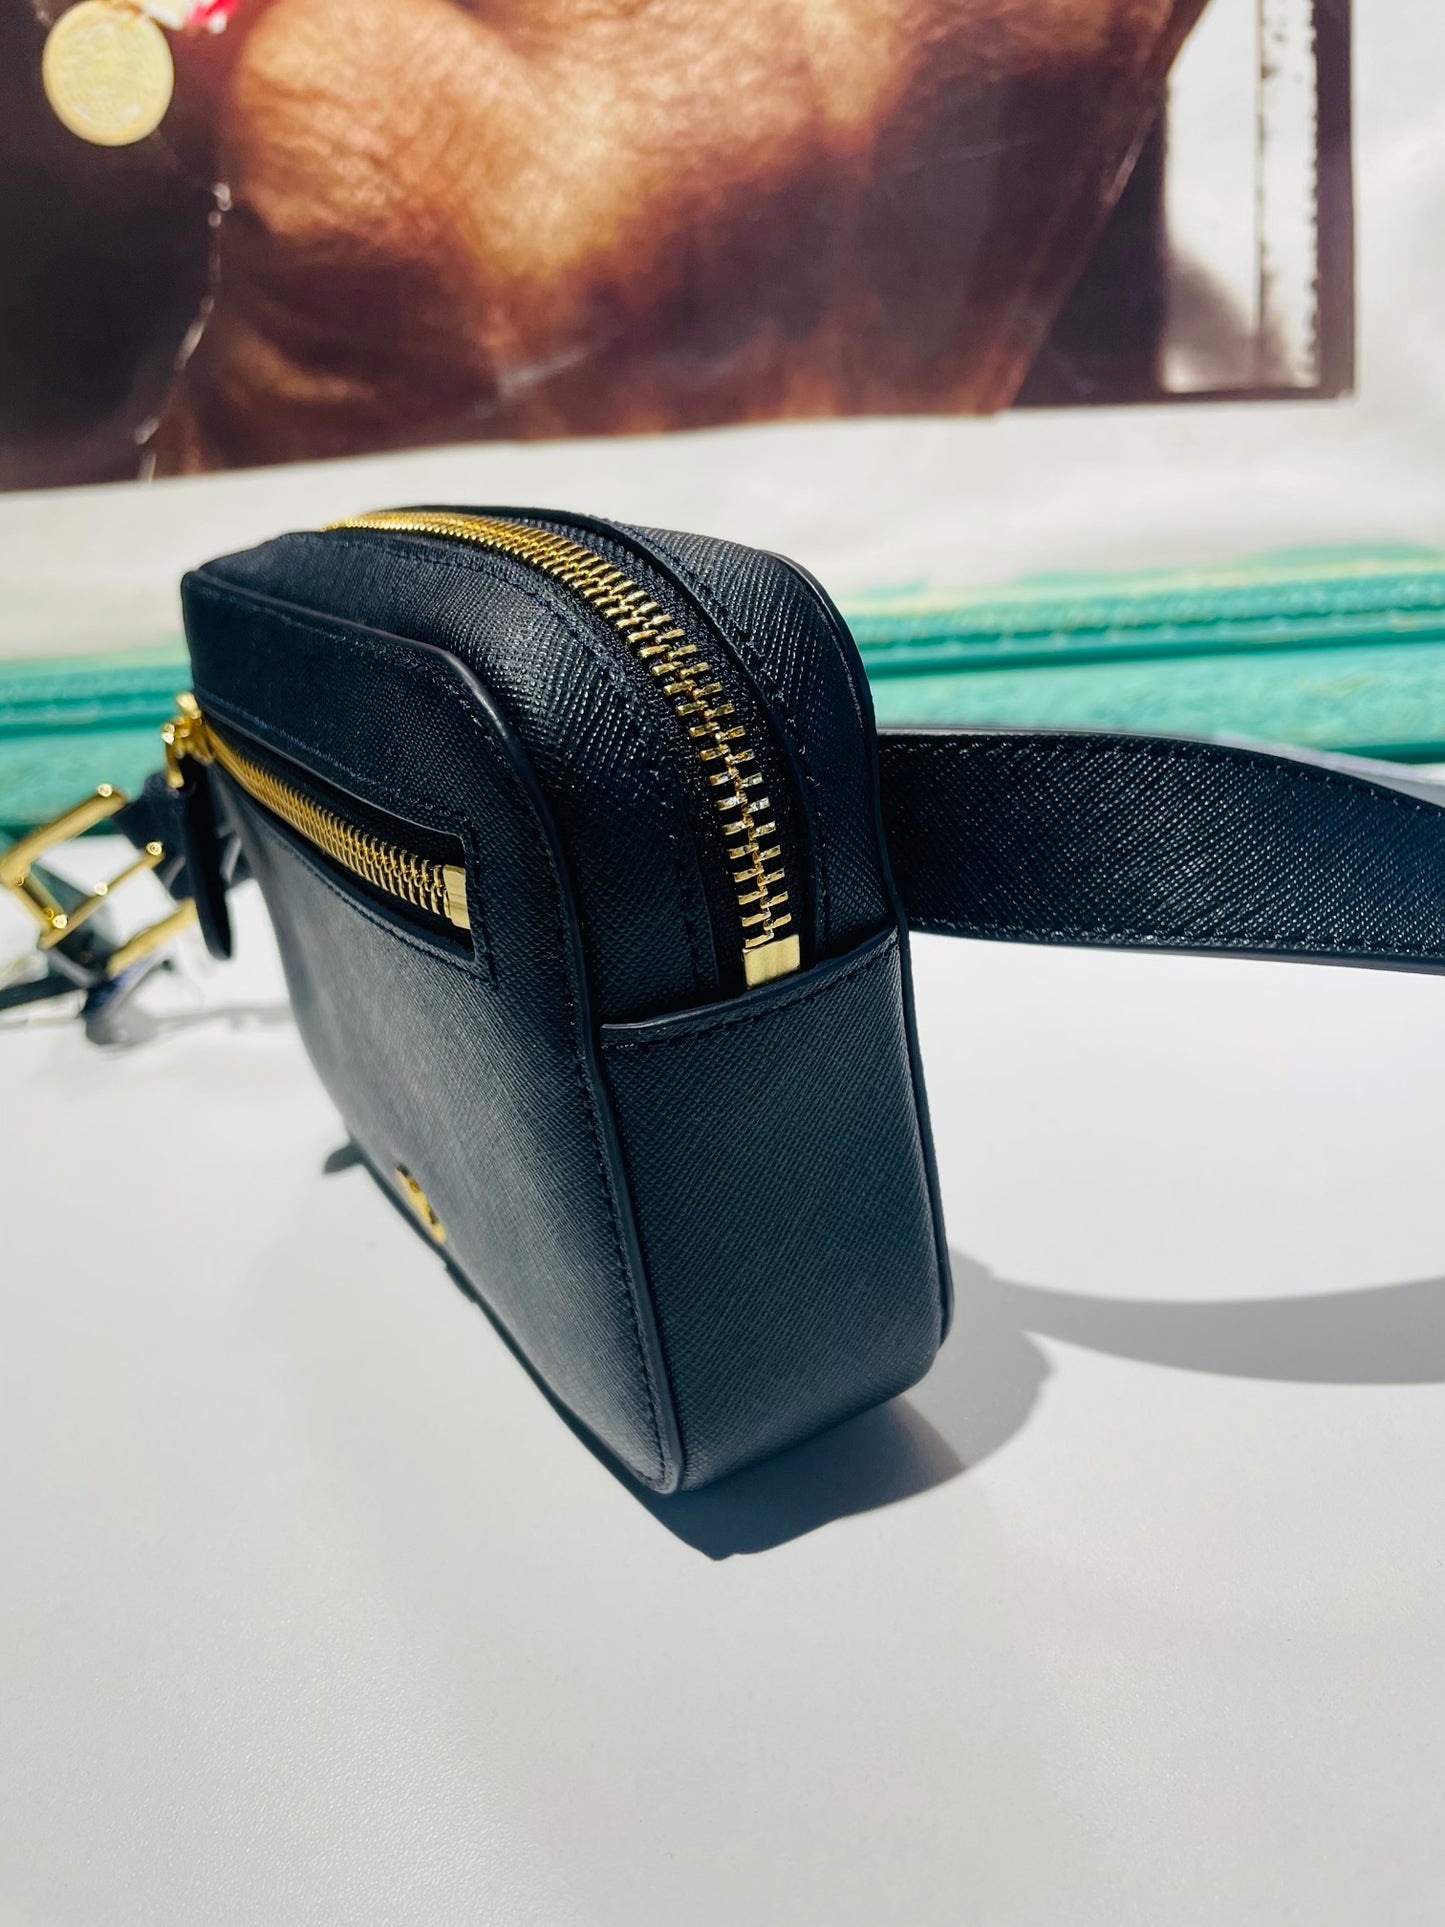 Ralph Lauren belt bag ( the belt can used alone)